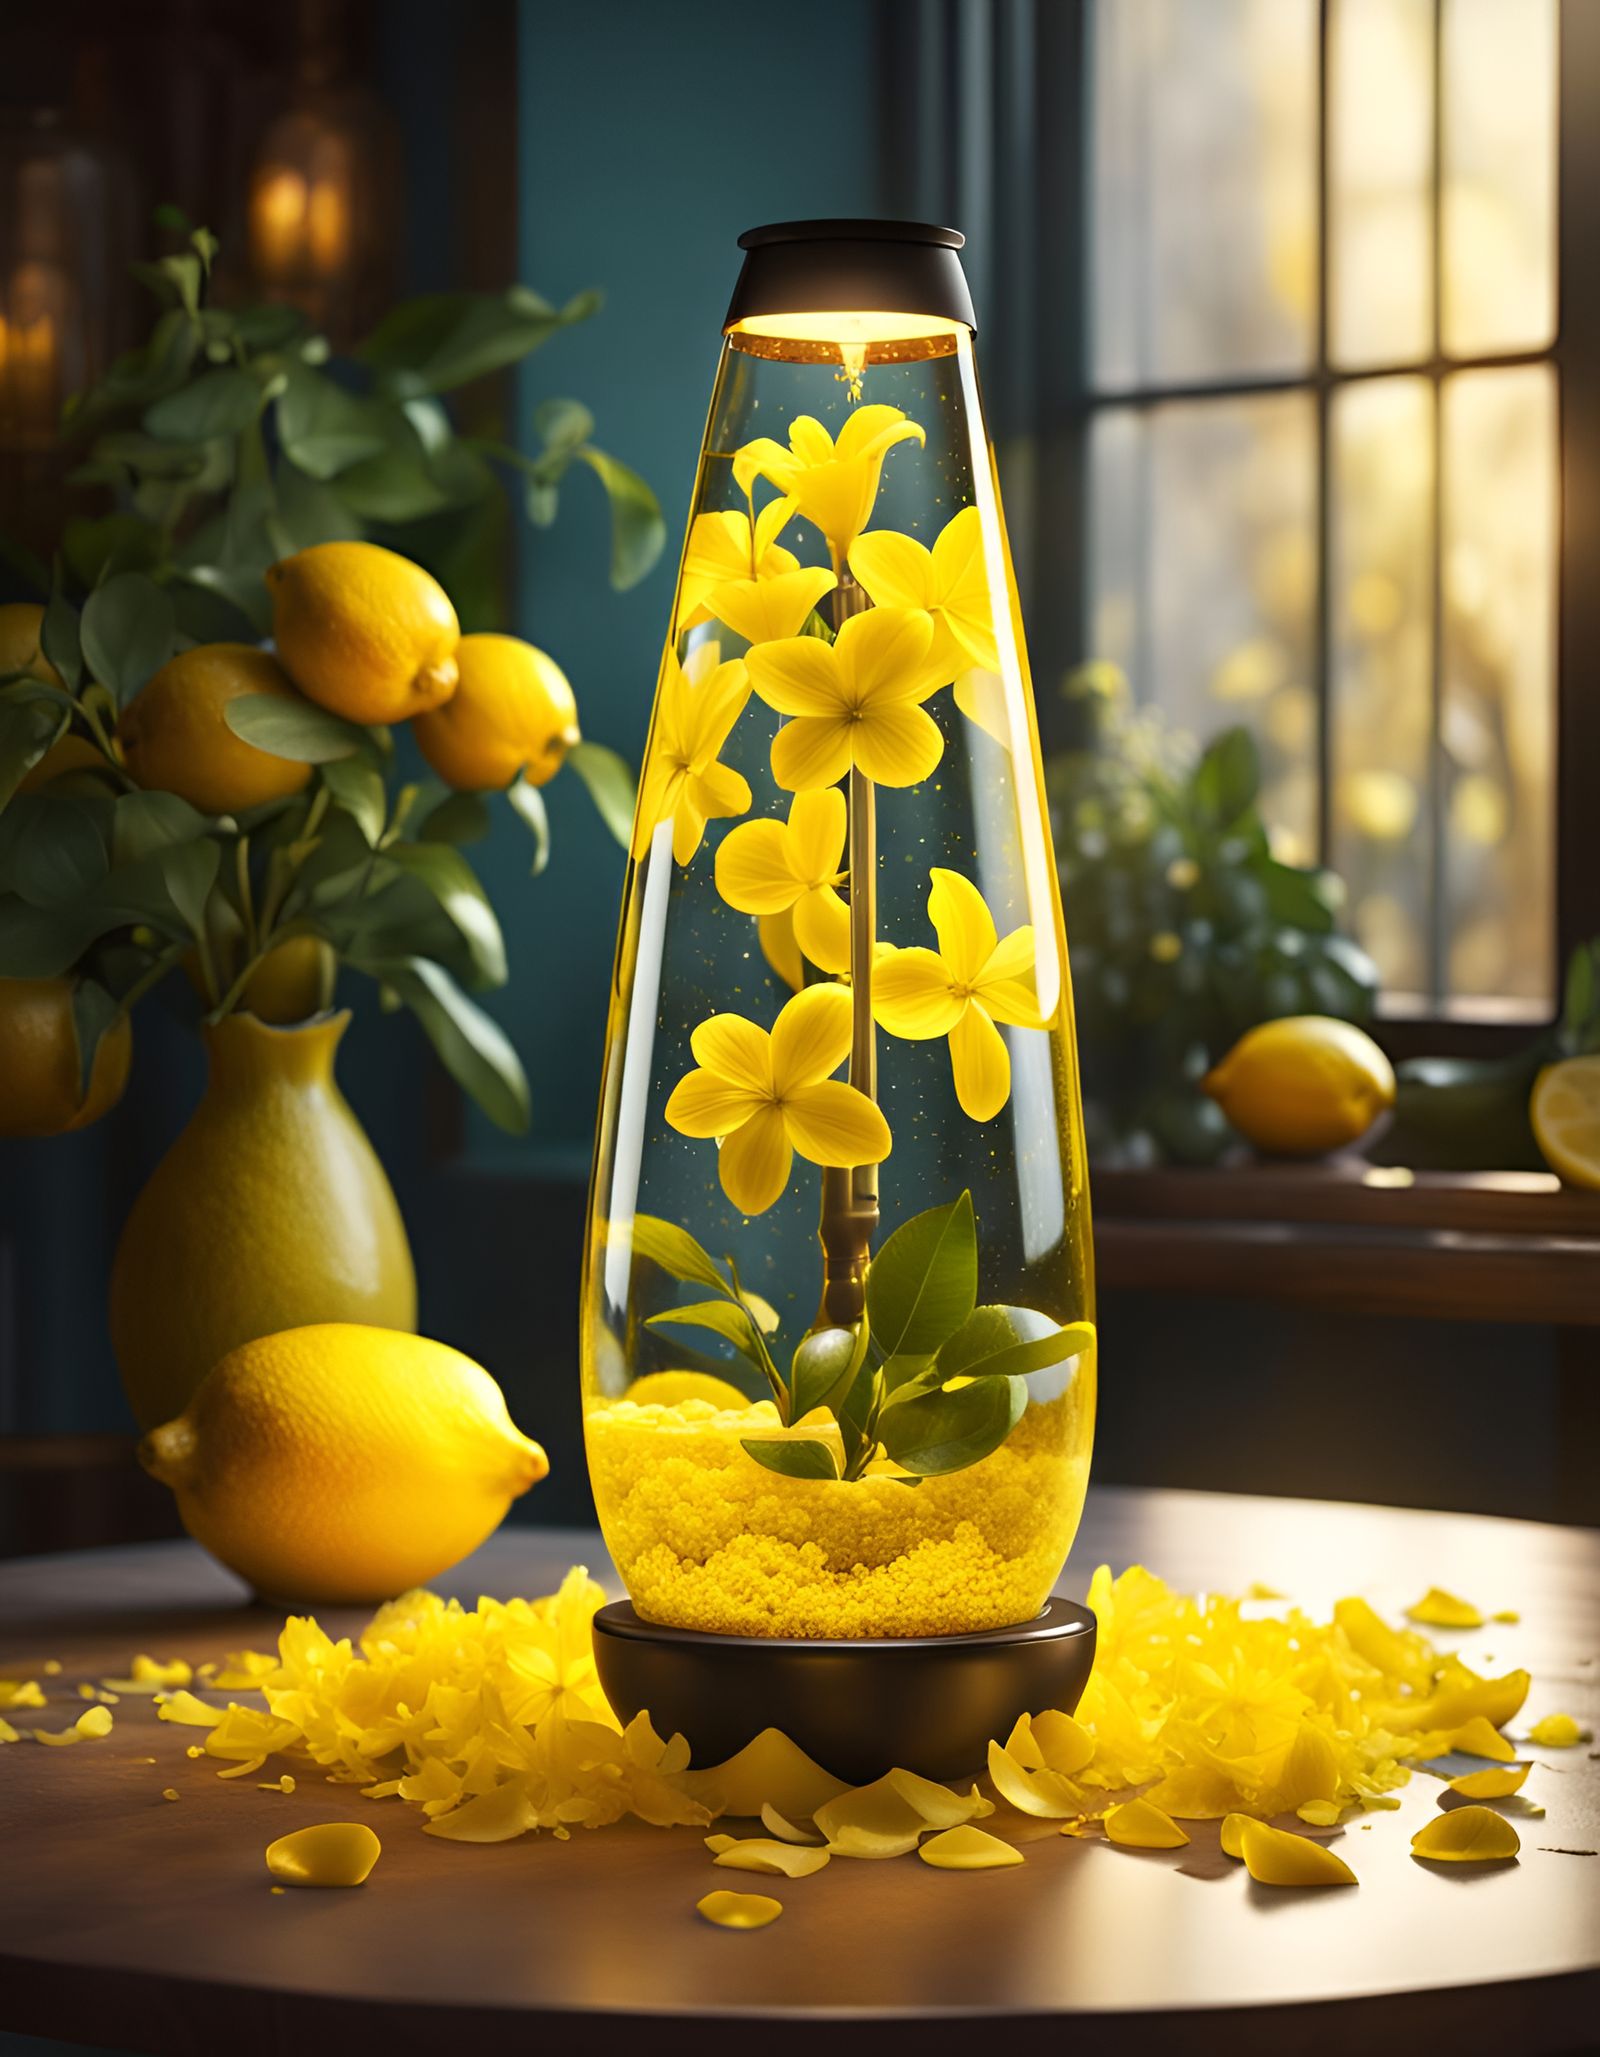 Yellow lava lamp and lemons